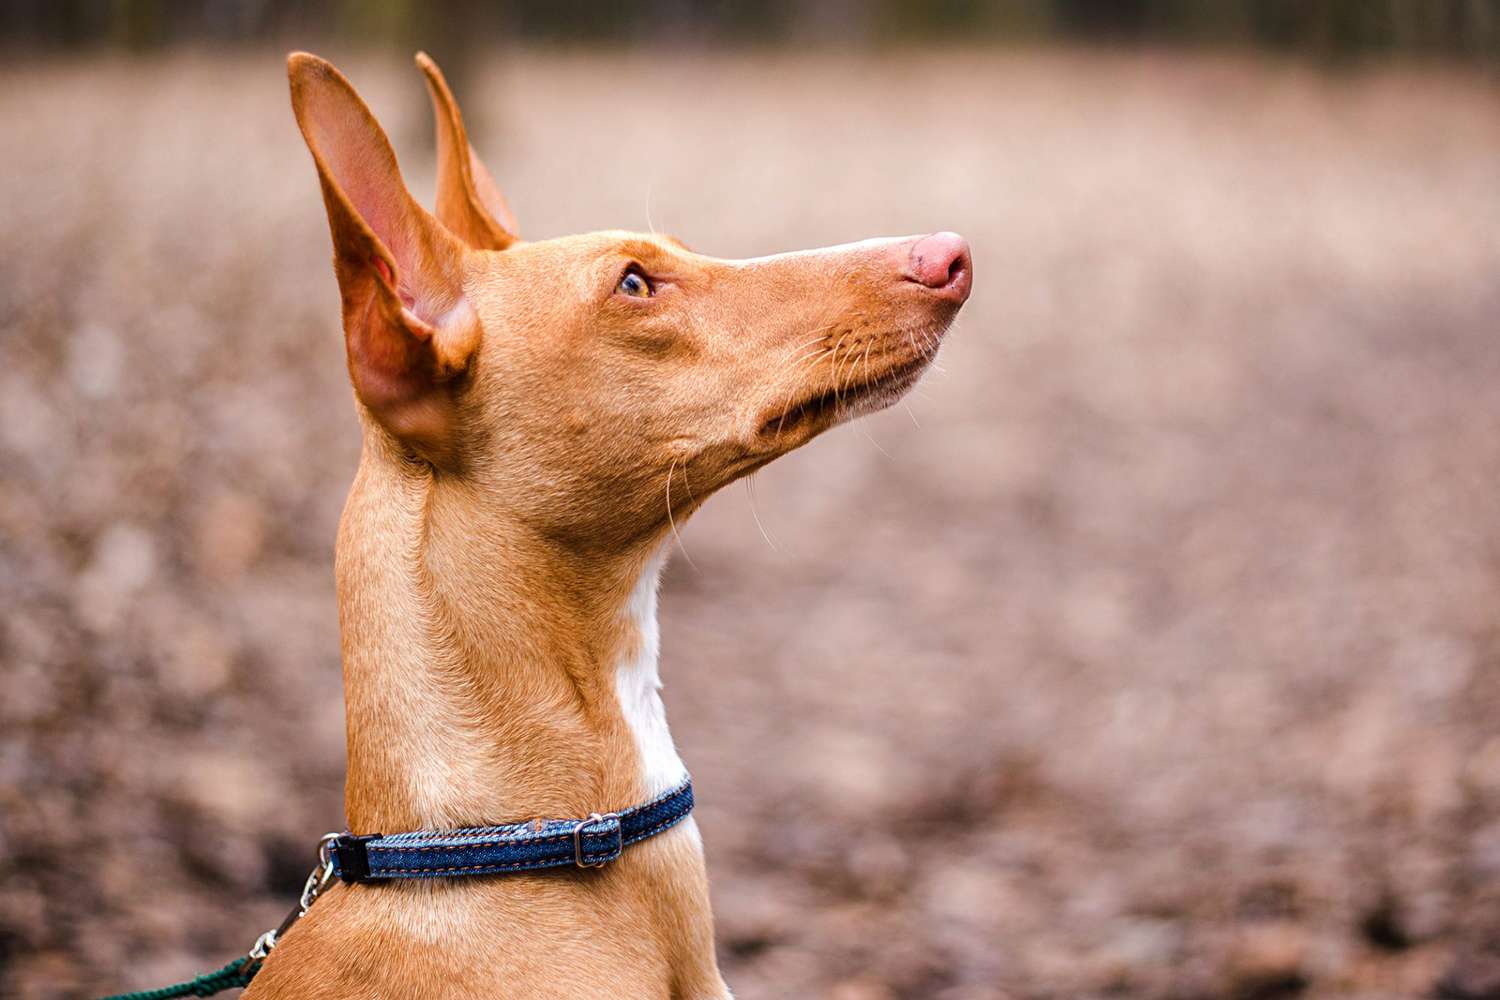 pharaoh hound profile closeup